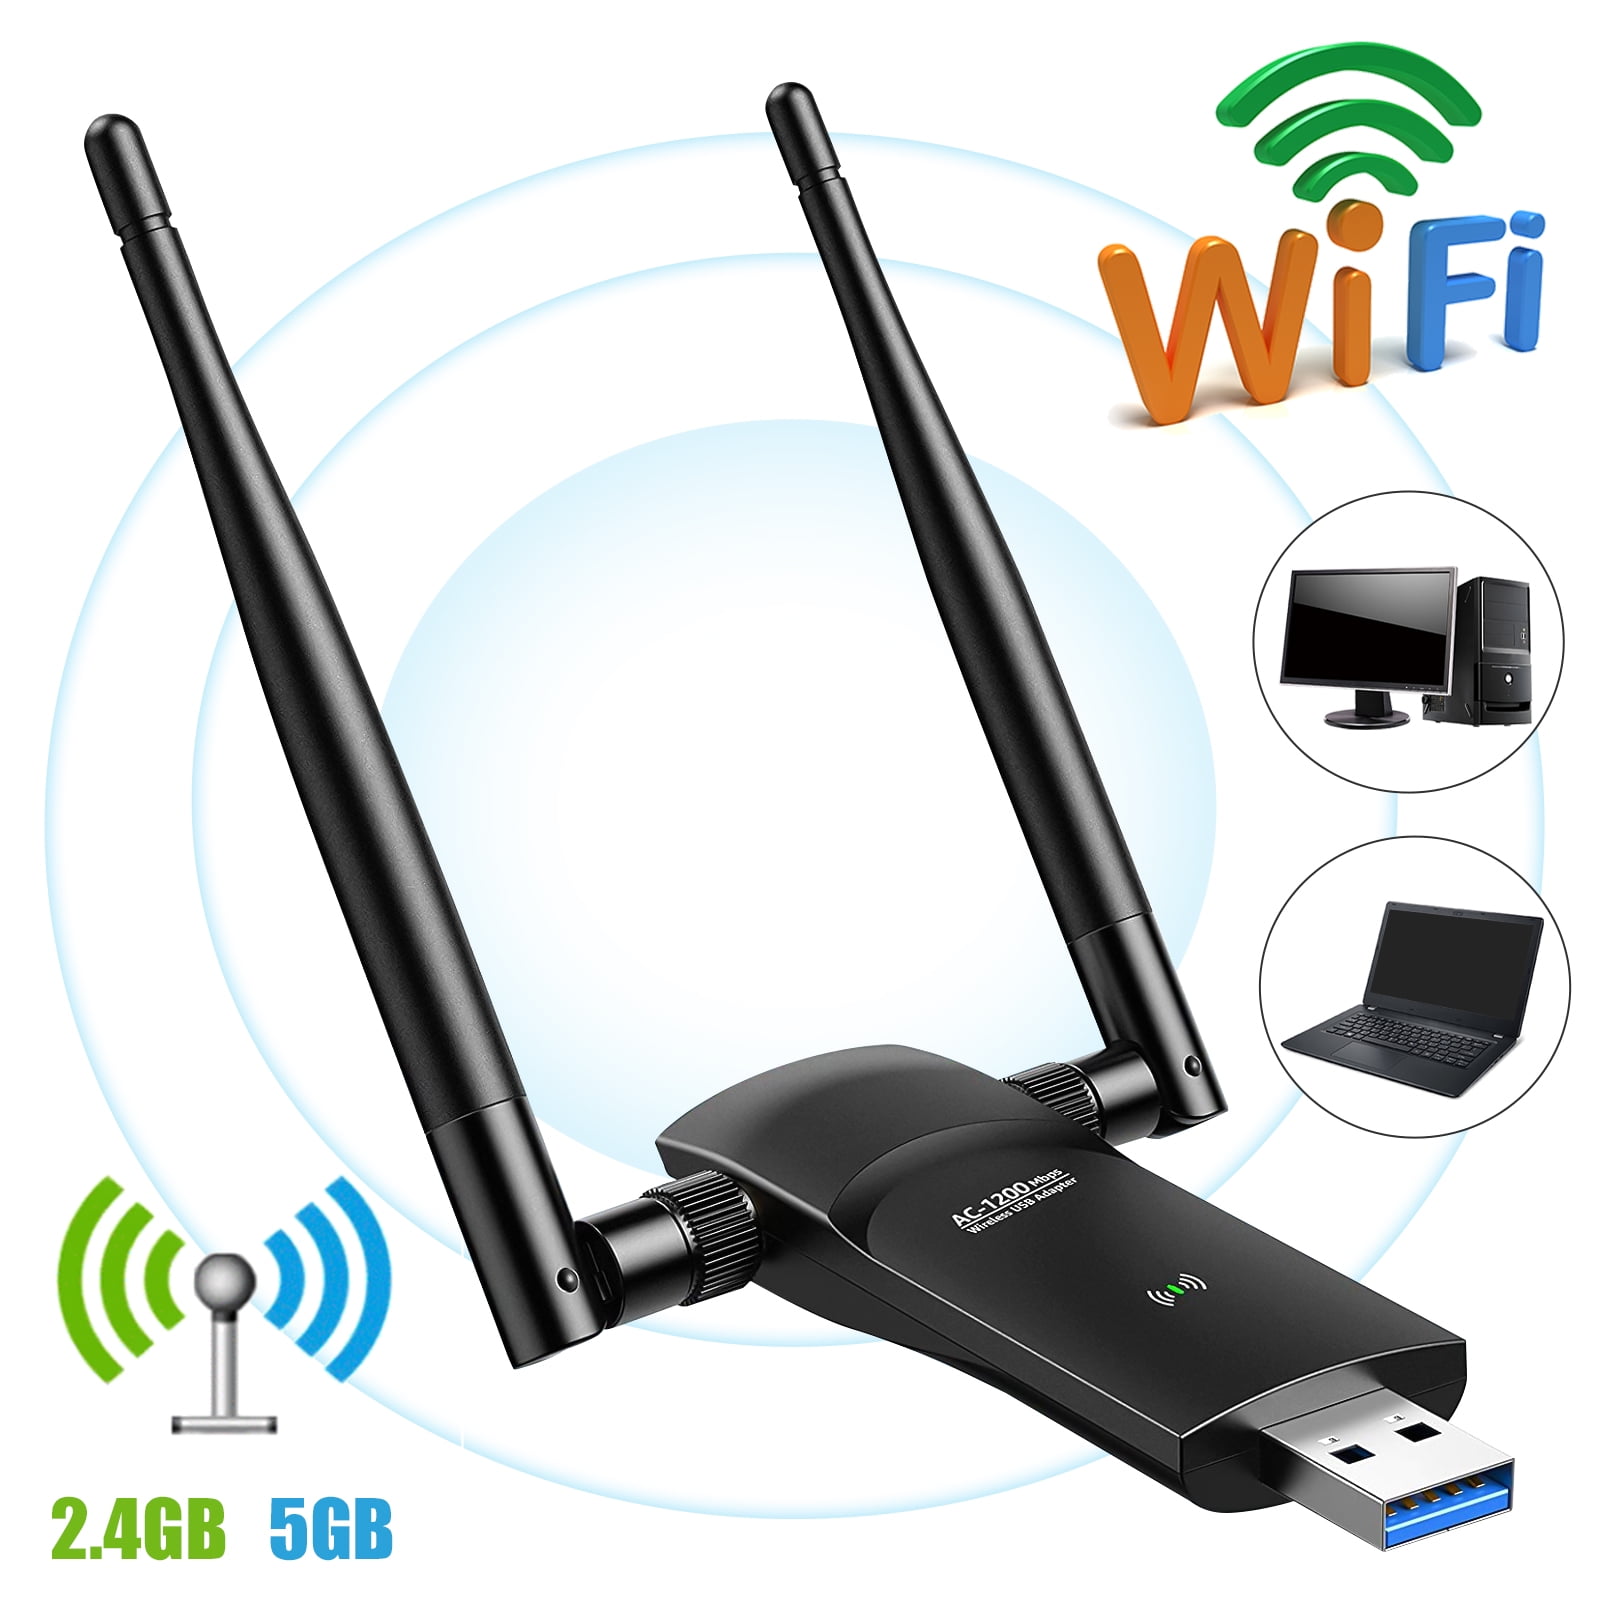 USB 3.0 Wireless Dongle Network High Gain Dual Band 2.4/5G 802.11ac with 5dBi Antenna for PC/Desktop/Laptop/Win 10/Win 8.1/ Win 8/Win 7/Vista/XP Mac OS 10.6-10.14 Kootek 1200Mbps USB WiFi Adapter 